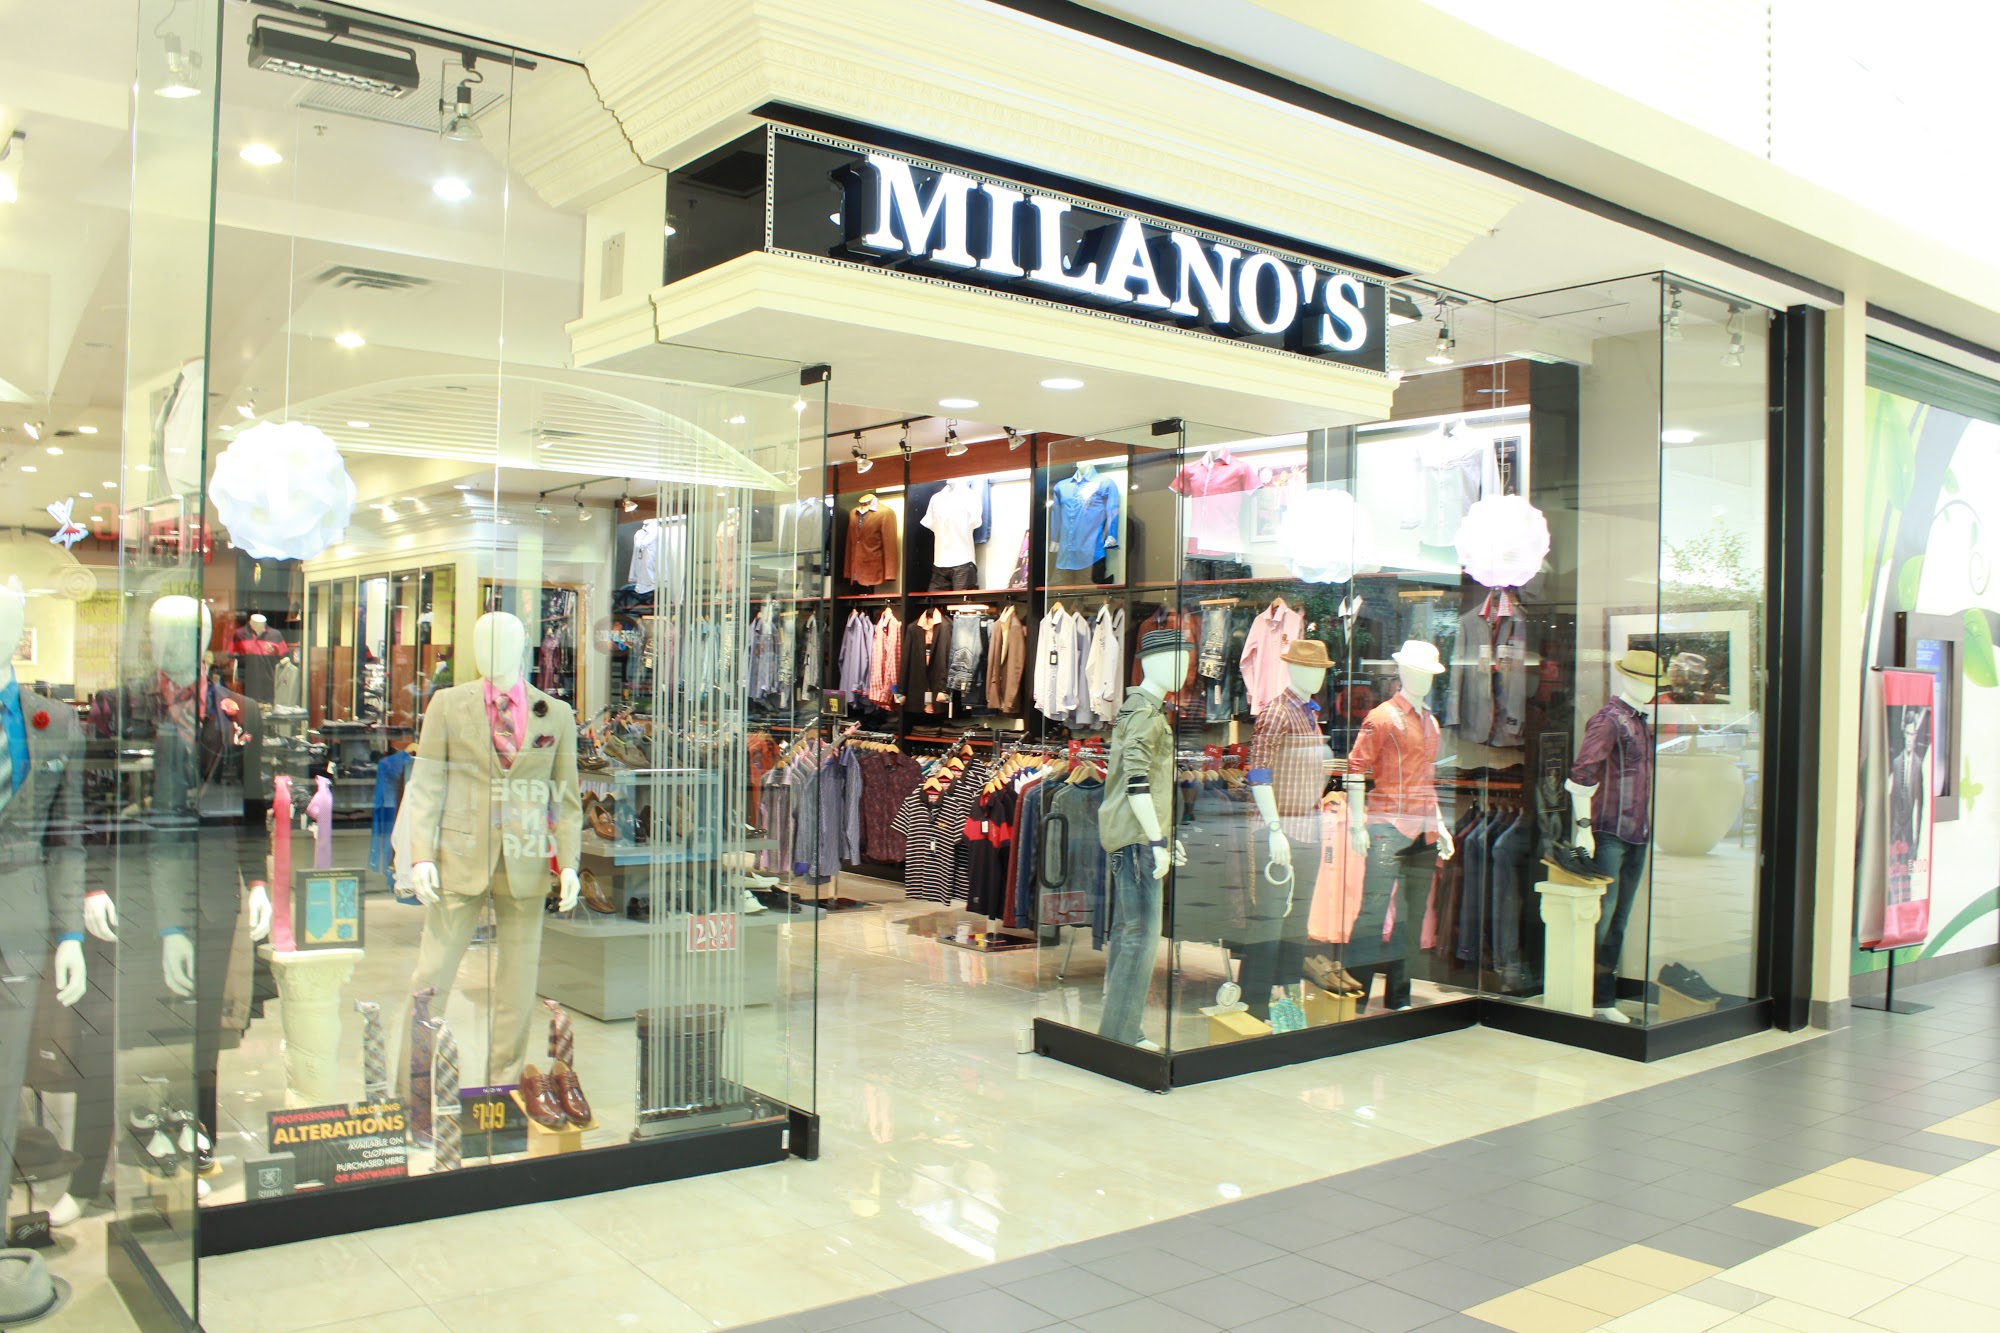 Milano's Men's Clothing